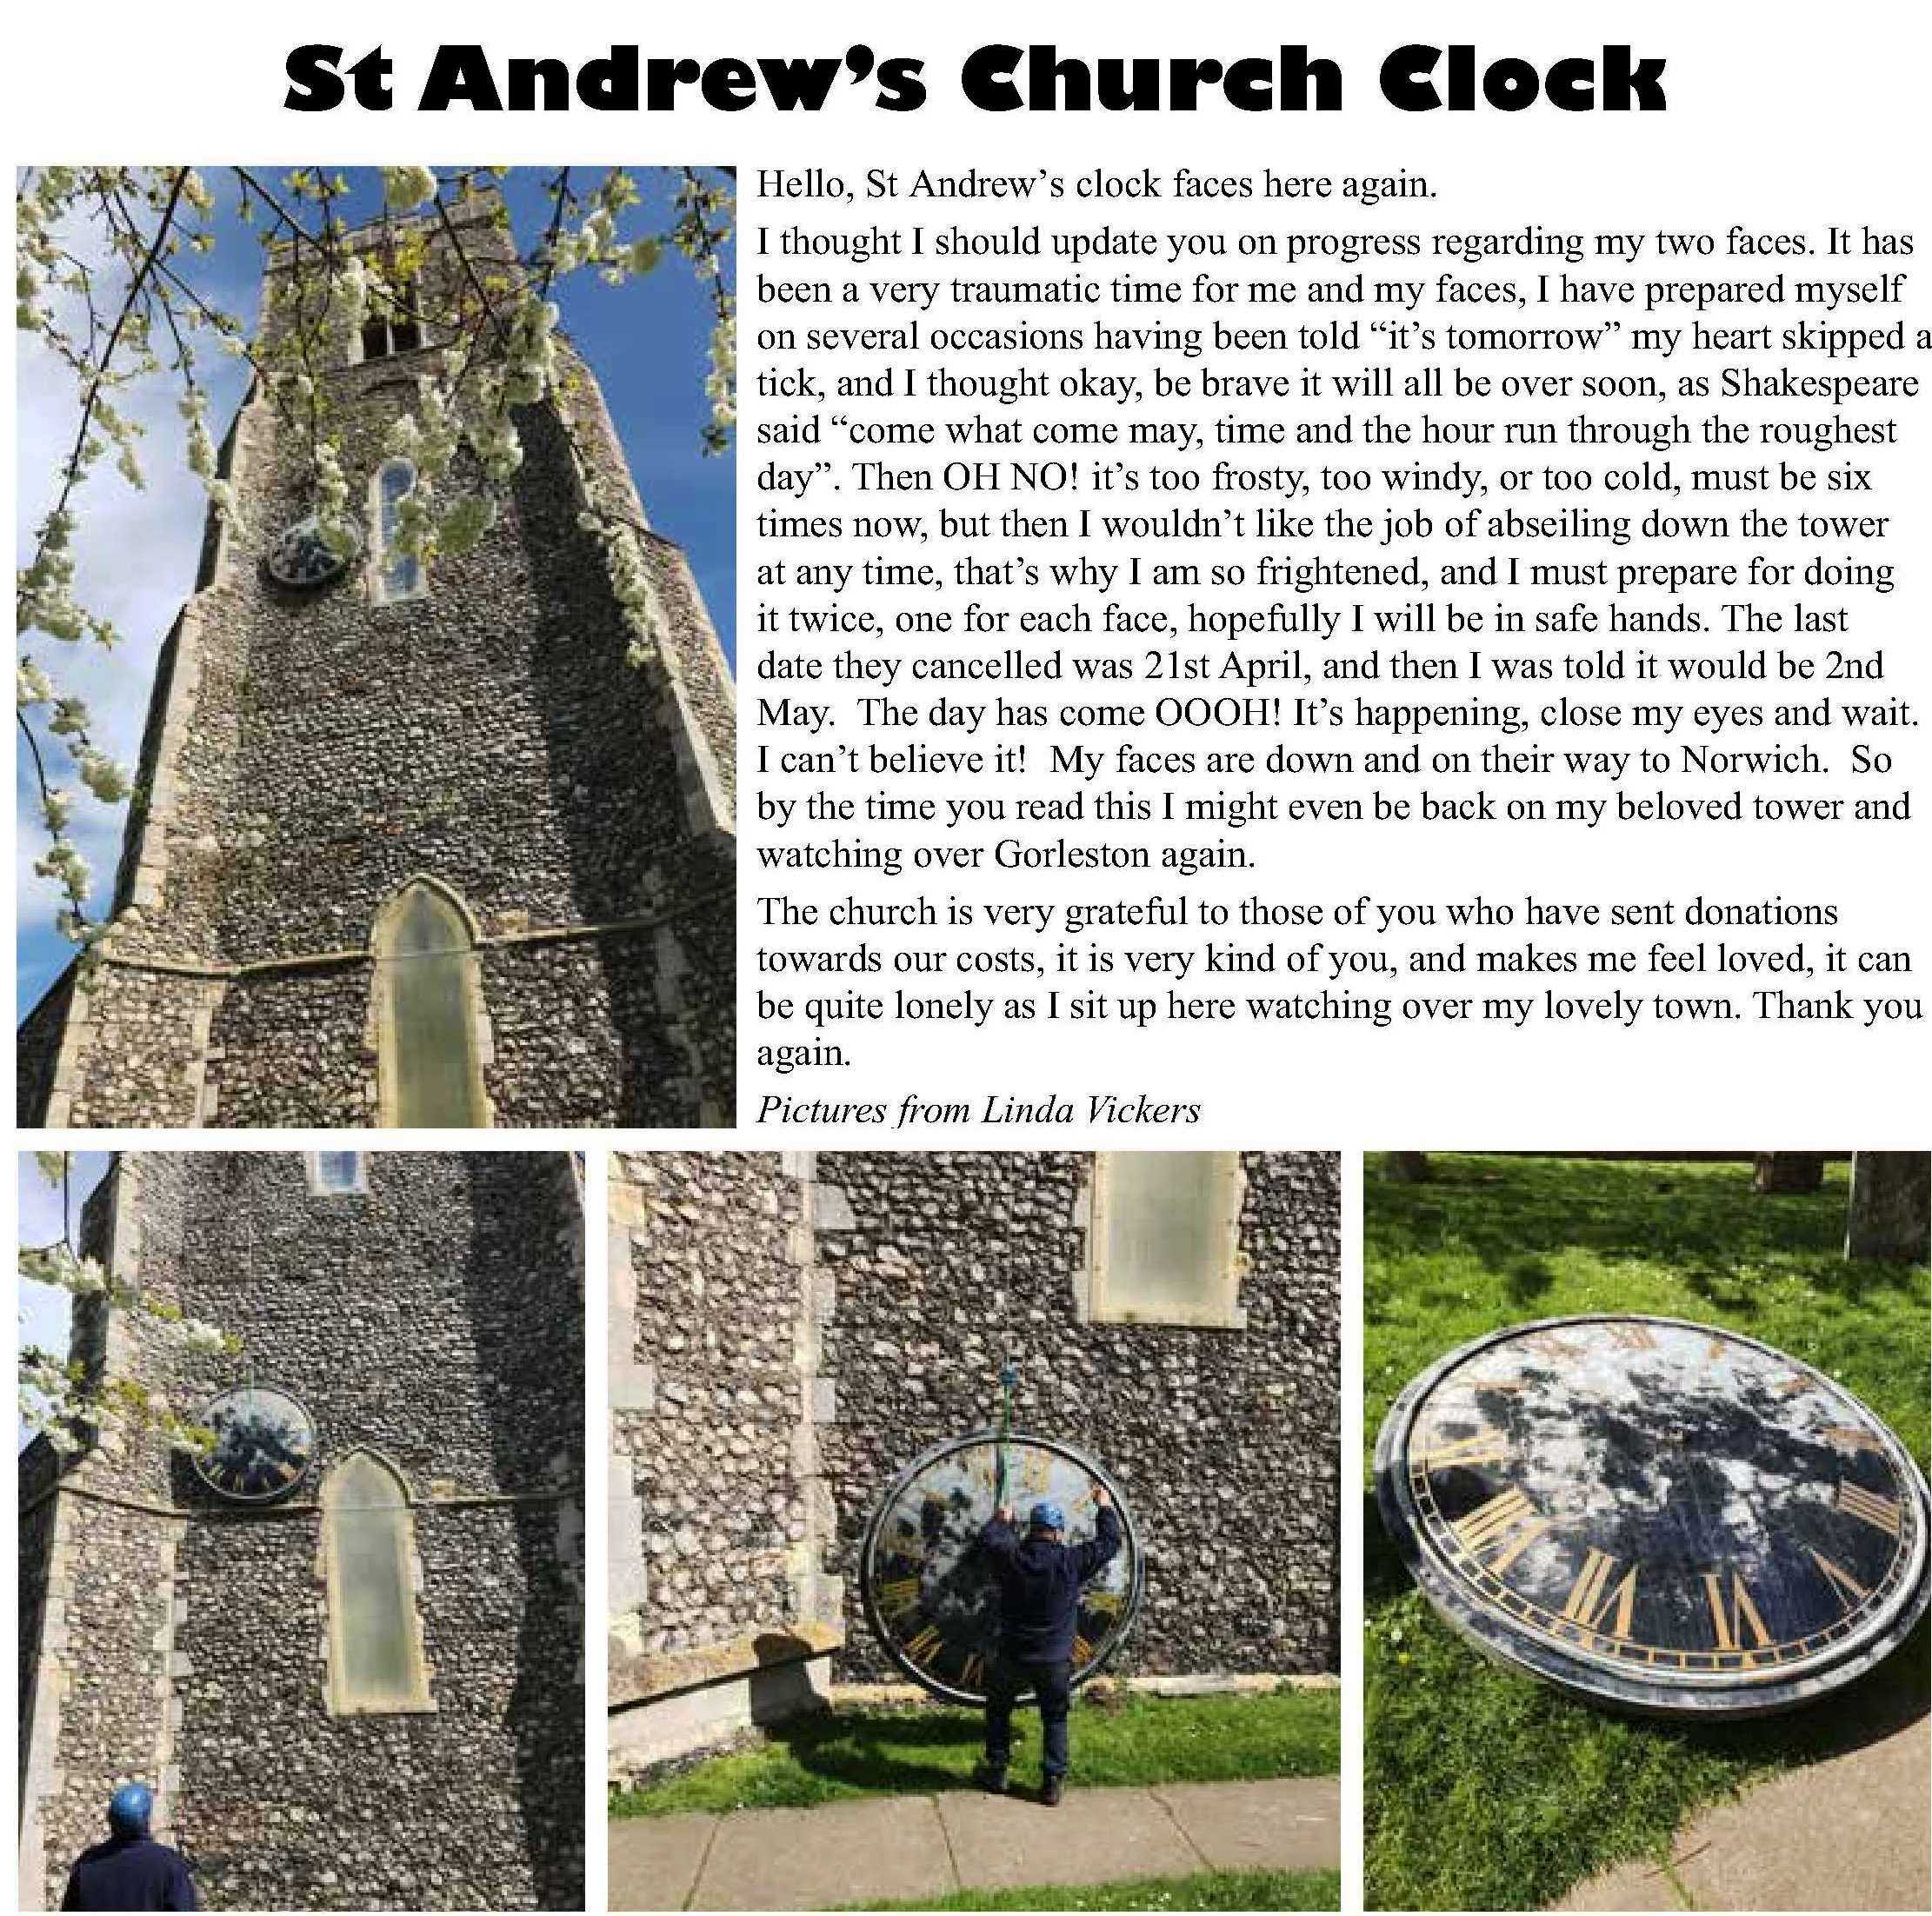 St Andrew's church clock 06-20